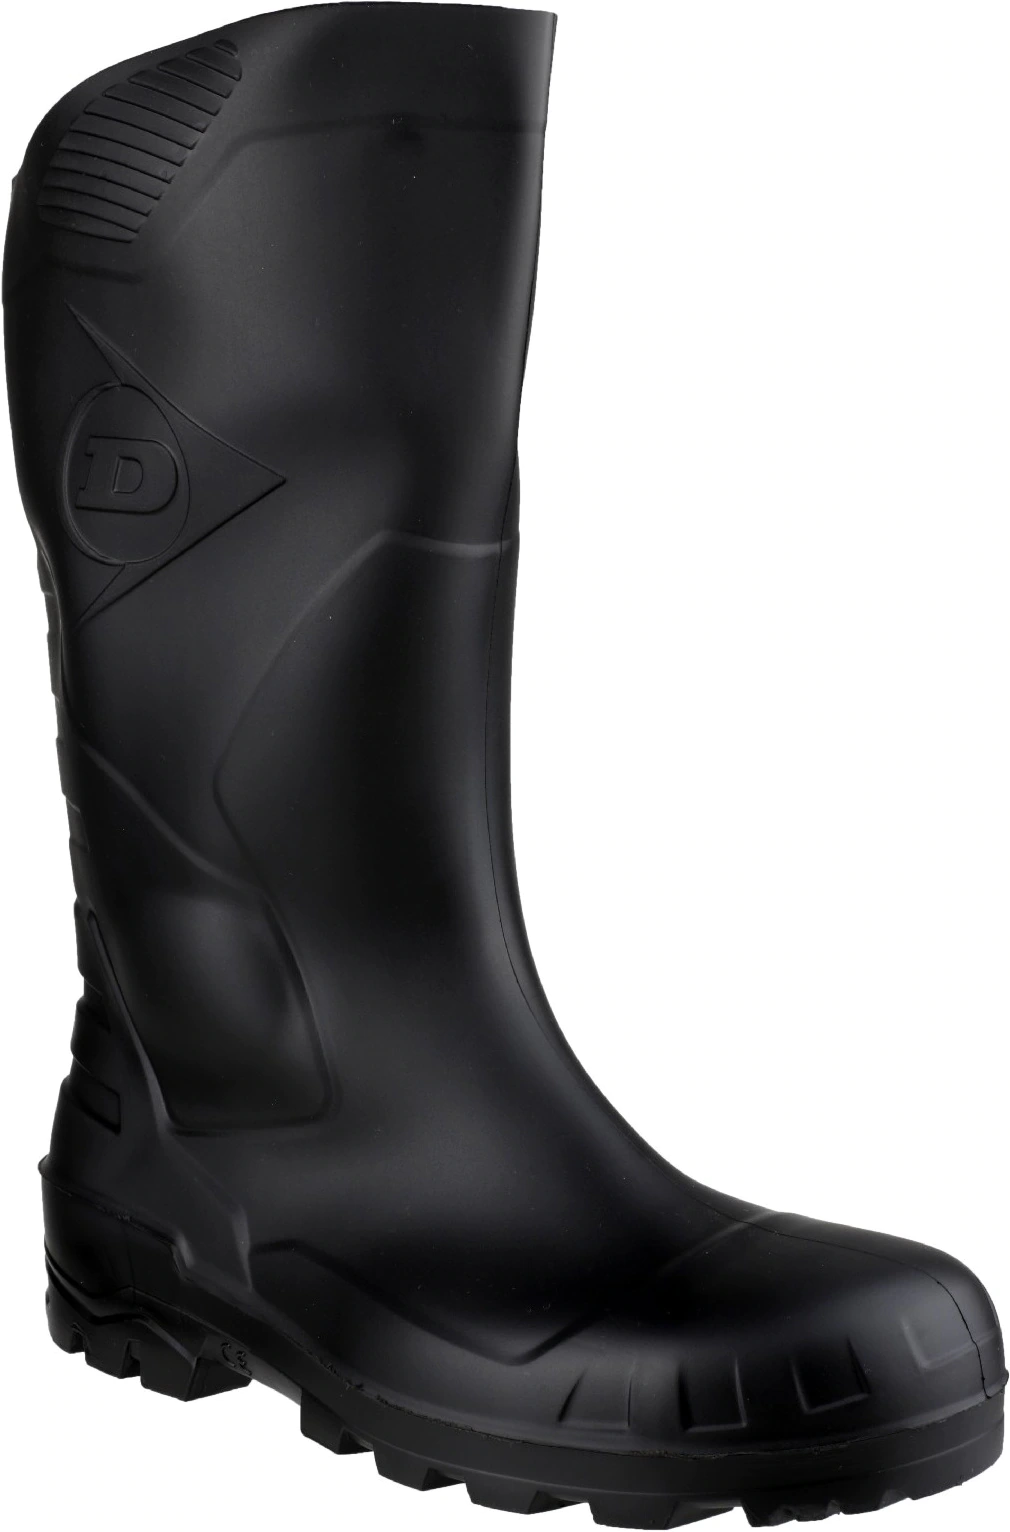 Dunlop Devon rubber boot safety rubber boot